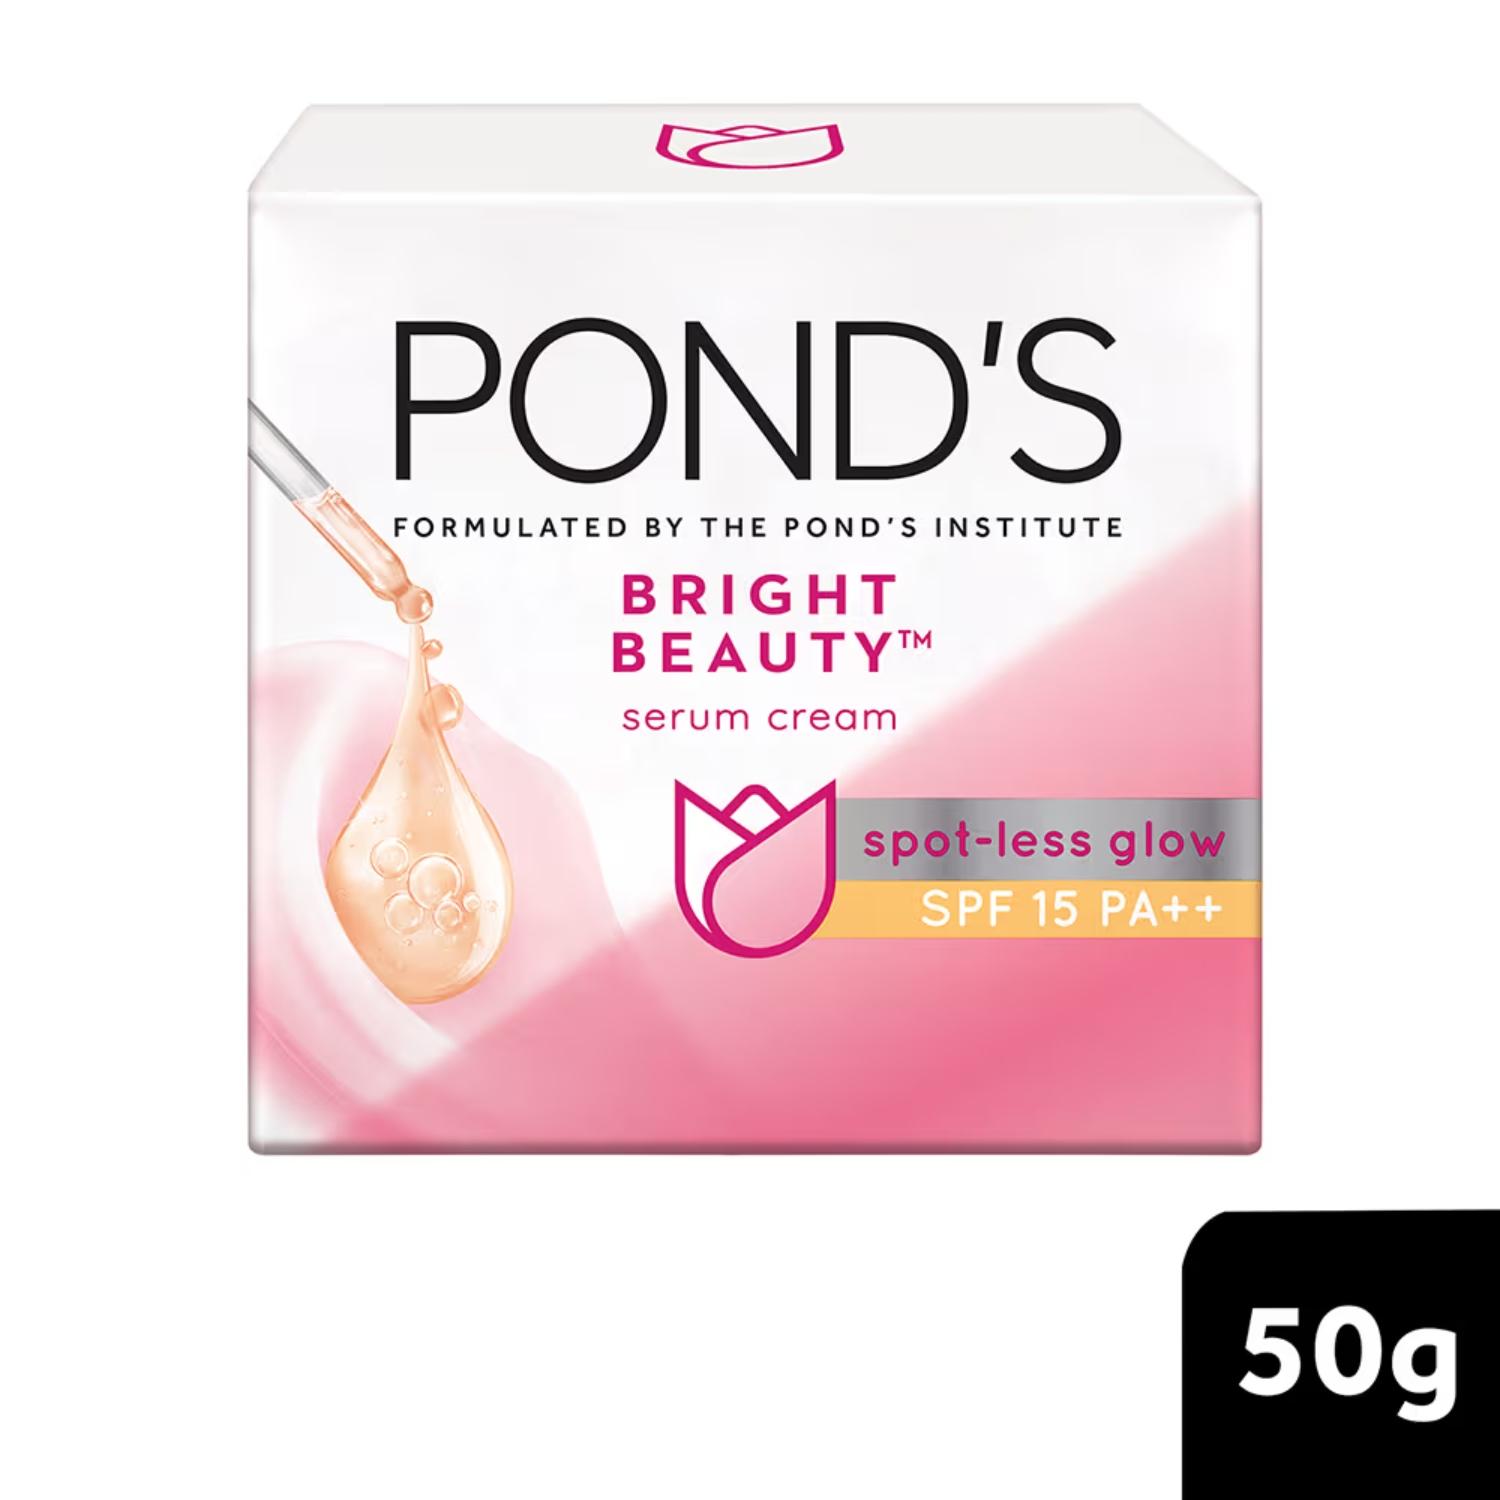 pond's-bright-beauty-spf-15-pa++-spot-less-glow-serum-cream-(50g)